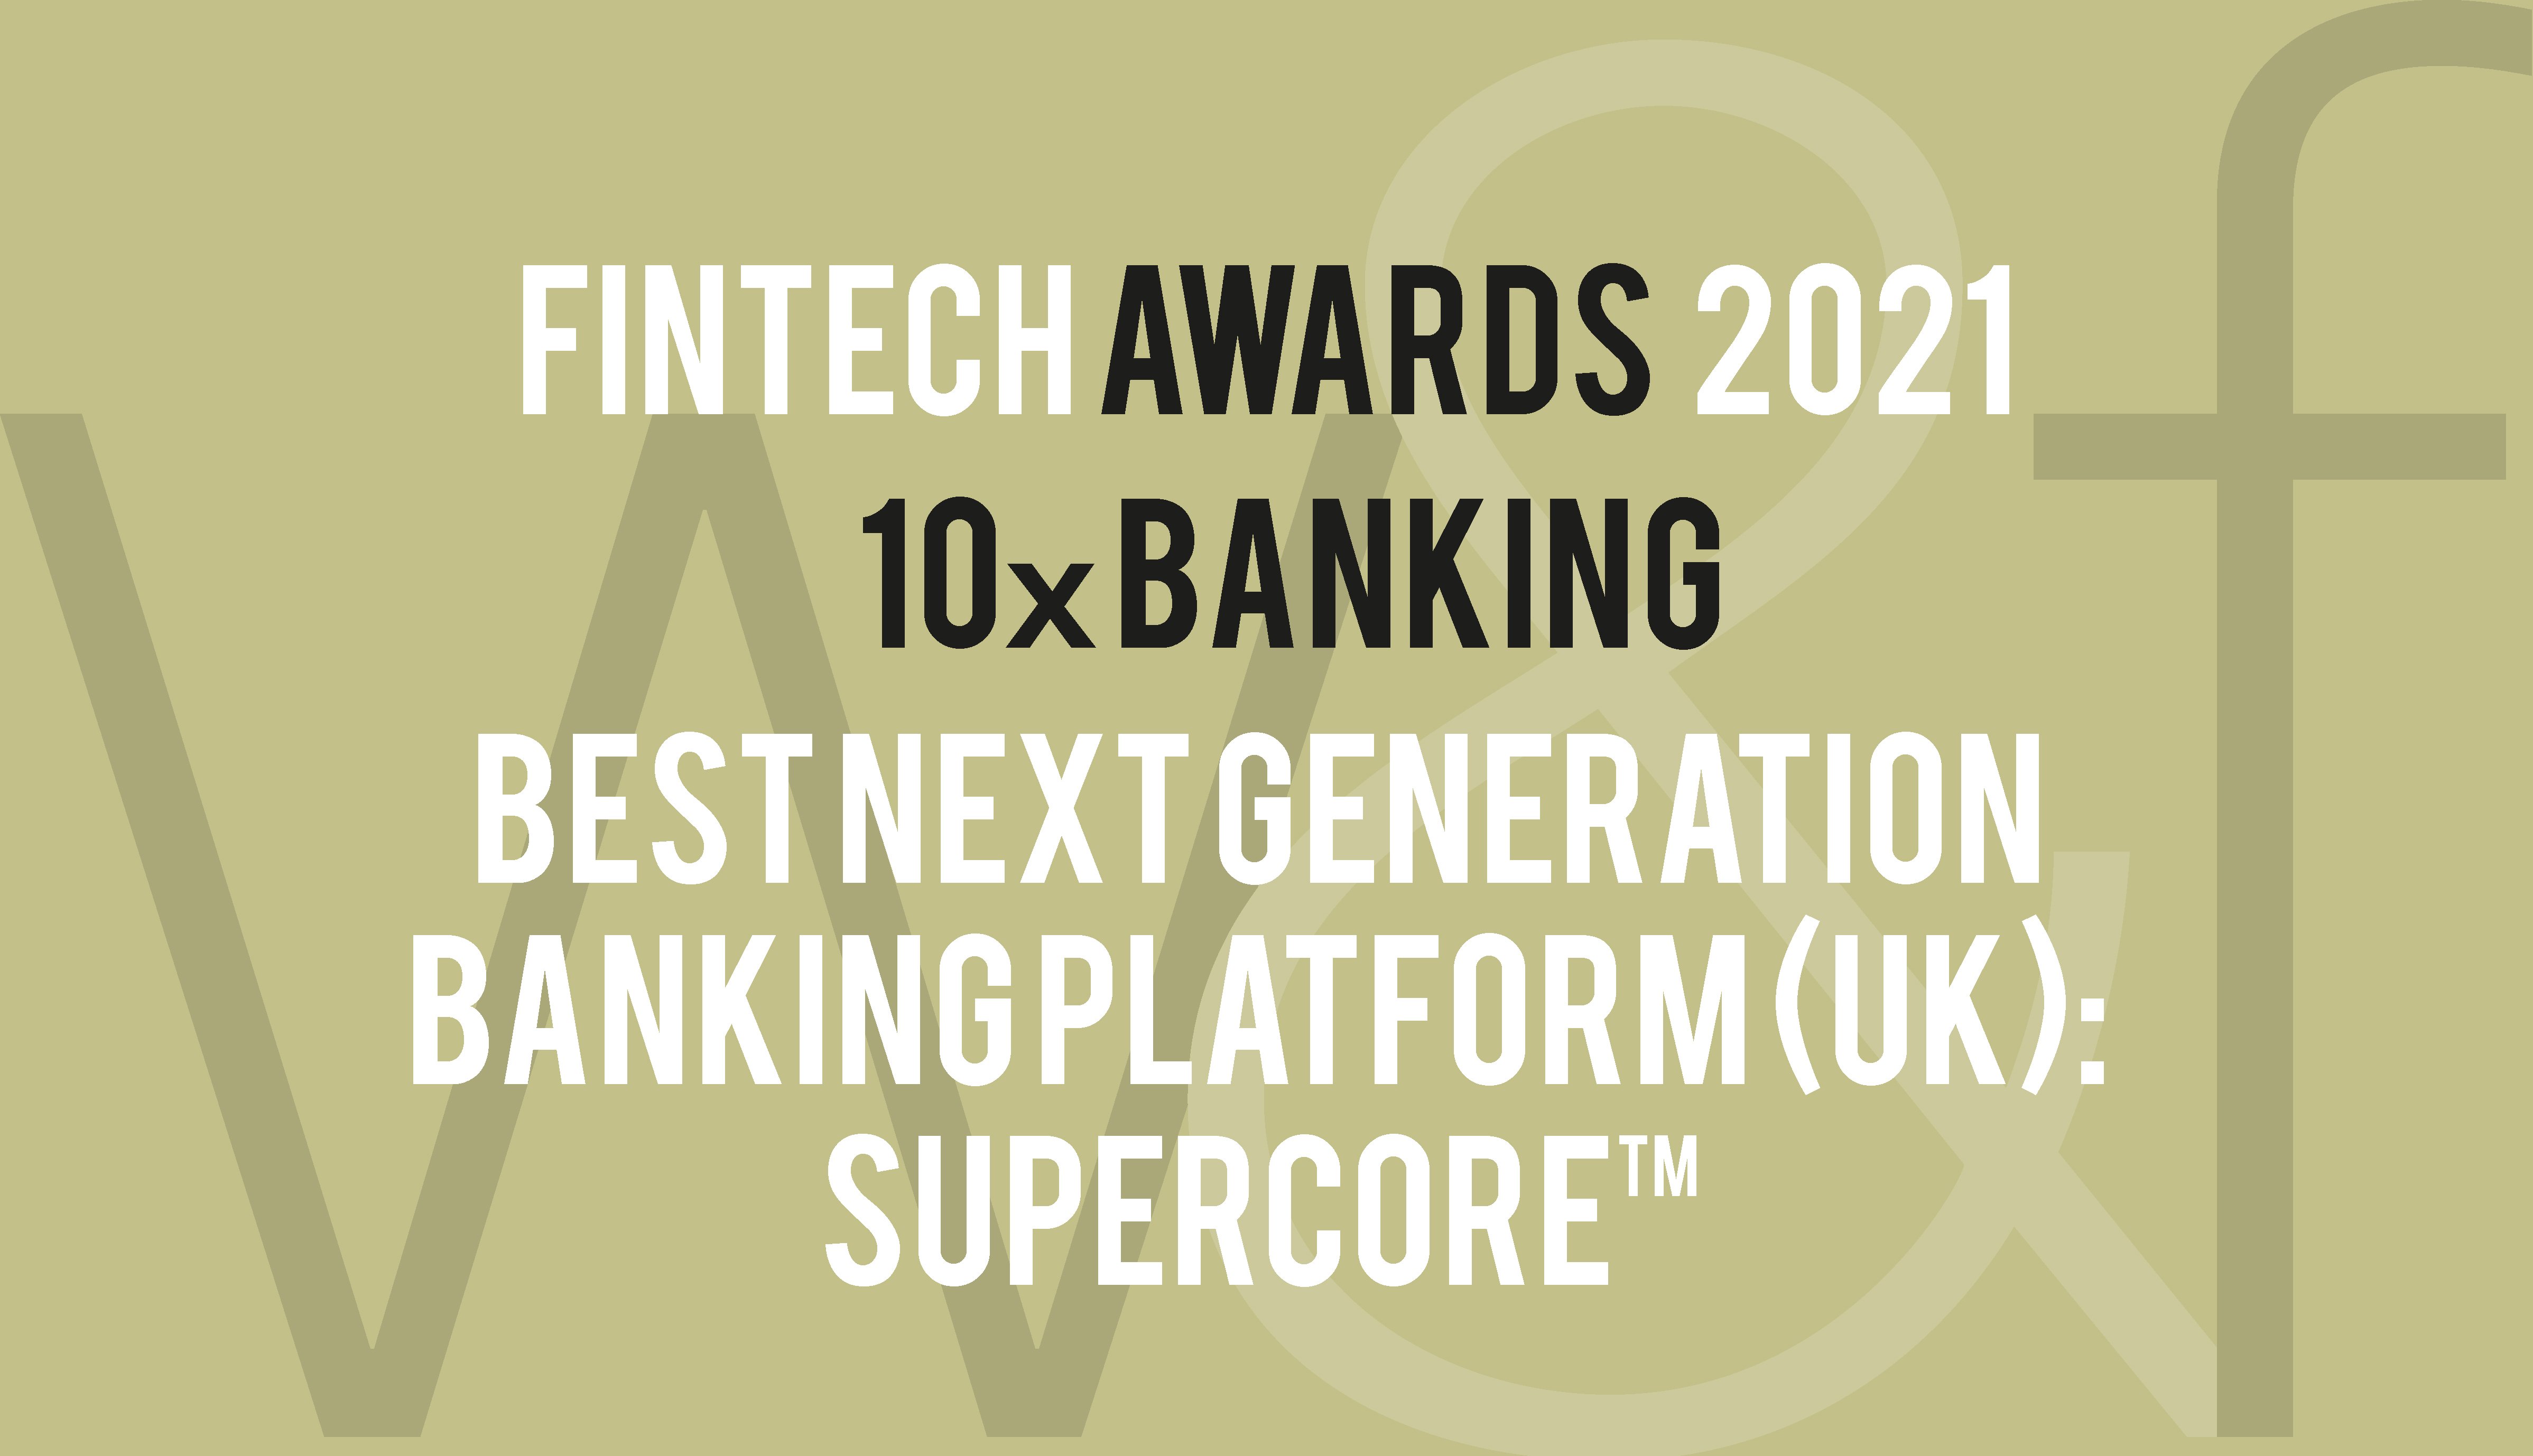 10x Wins Best Next-Generation Banking Platform in the Fintech Awards 2021 